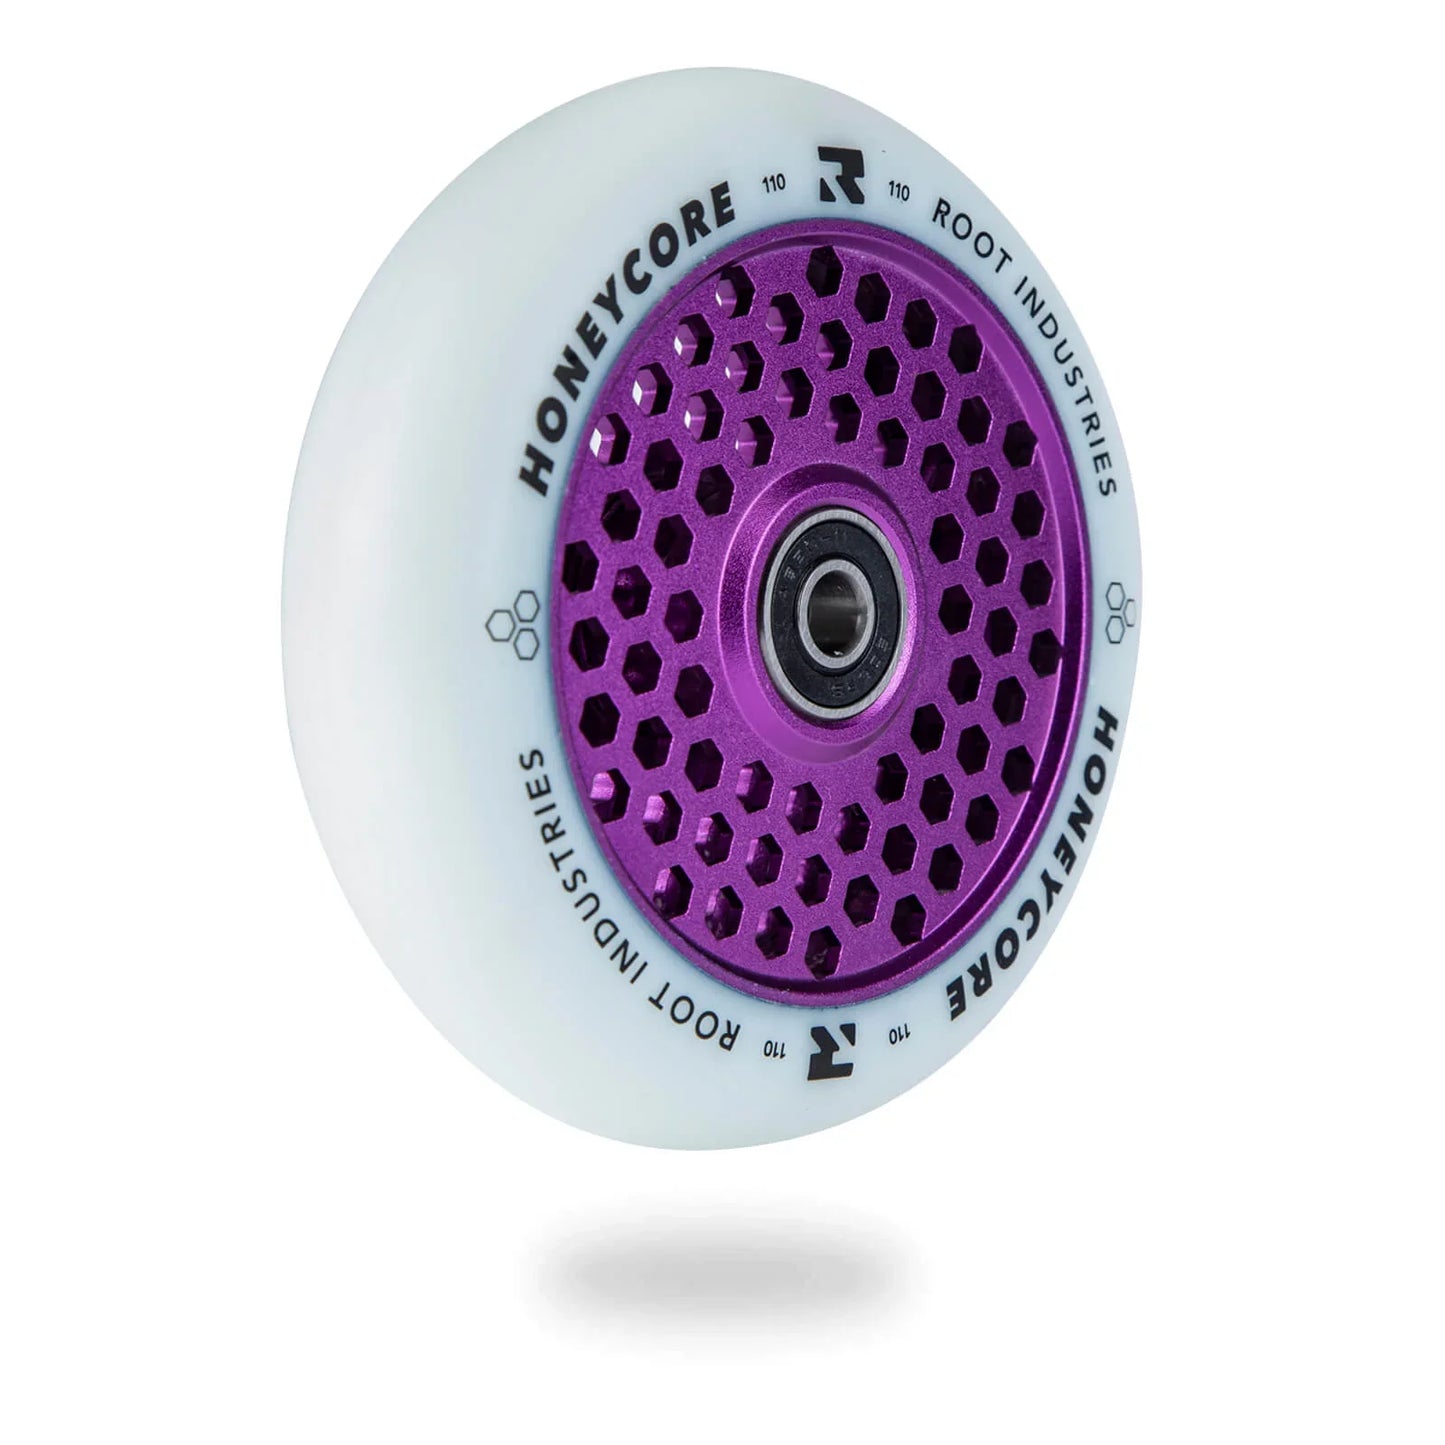 ROOT INDUSTRIES Honeycore Wheels 110mm White / Purple